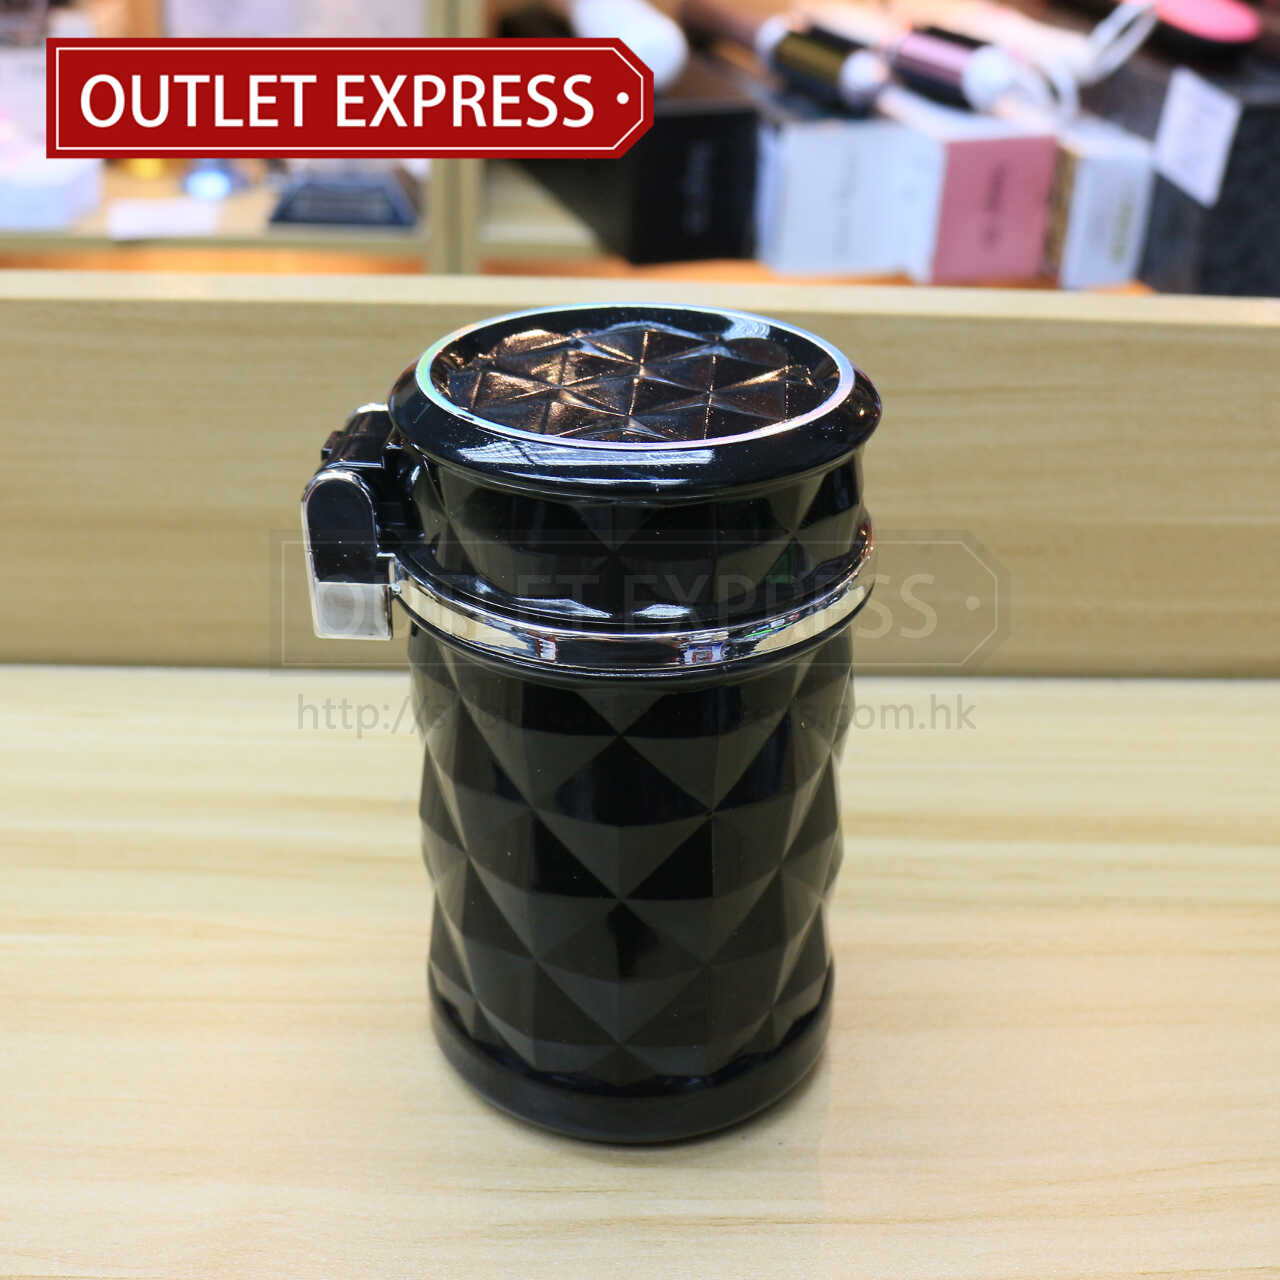 LED燈汽車煙灰缸(黑色)- Outlet Express HK生活百貨城實拍相片